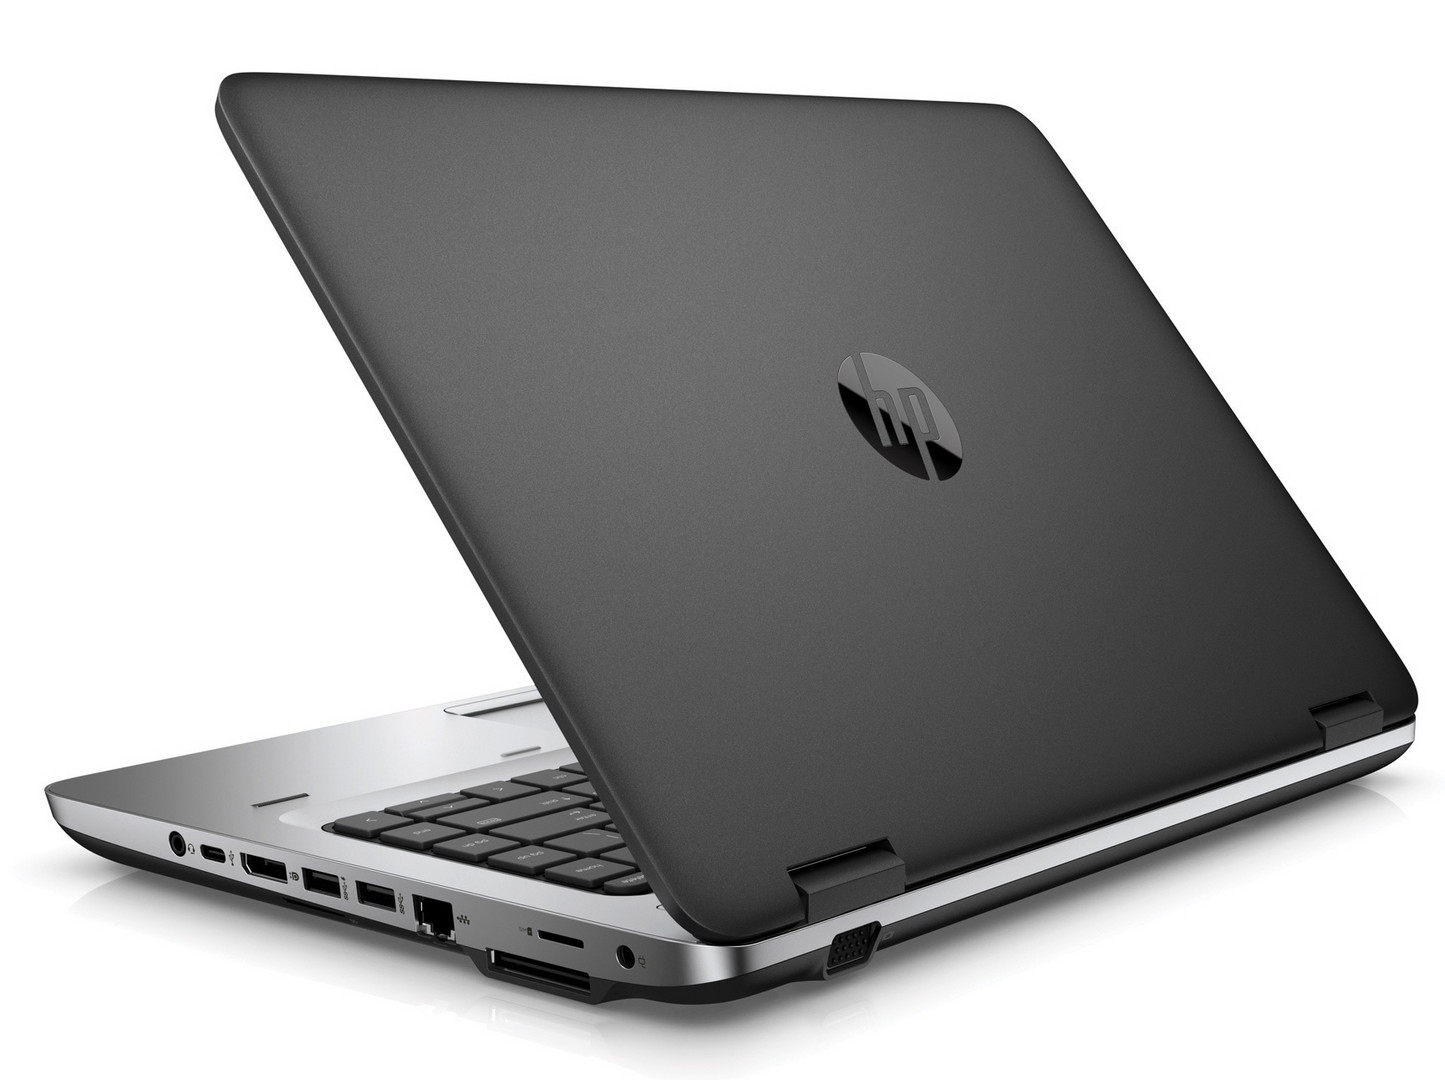 Ноутбук HP ProBook 640 G3 Core i5-7200U 2.5GHz,14" FHD (1920x1080) AG,8Gb DDR4(1),256Gb SSD,DVDRW,48Wh LL,FPR,2.1kg,1y,Gray,Win10Pro-15853